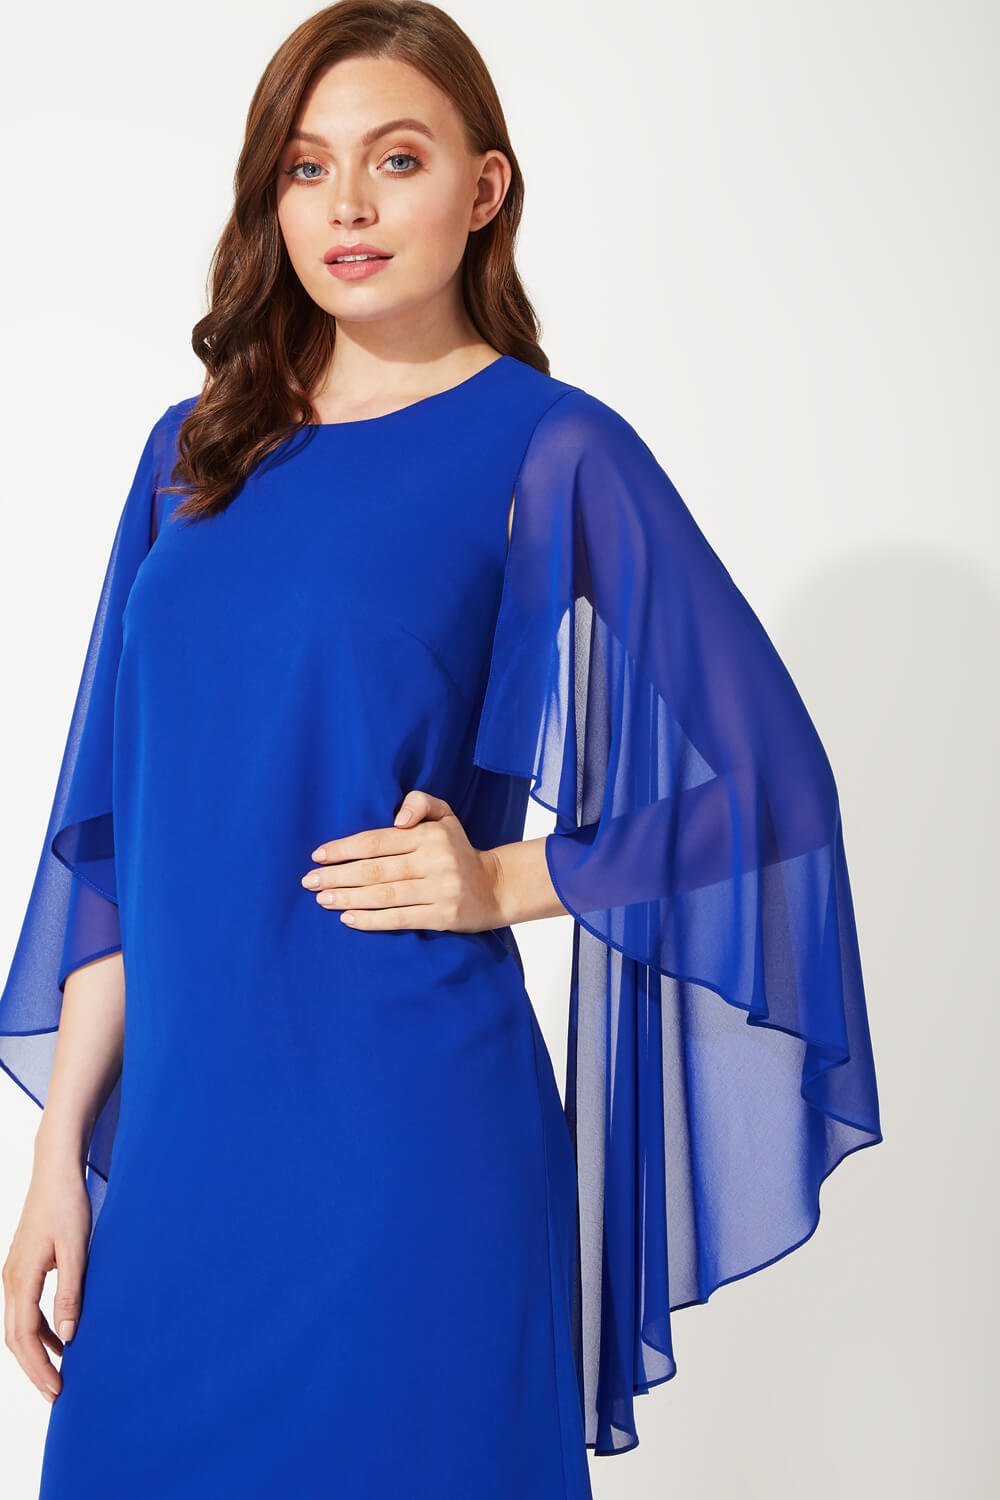 Chiffon Cape Sleeve Dress in Royal Blue